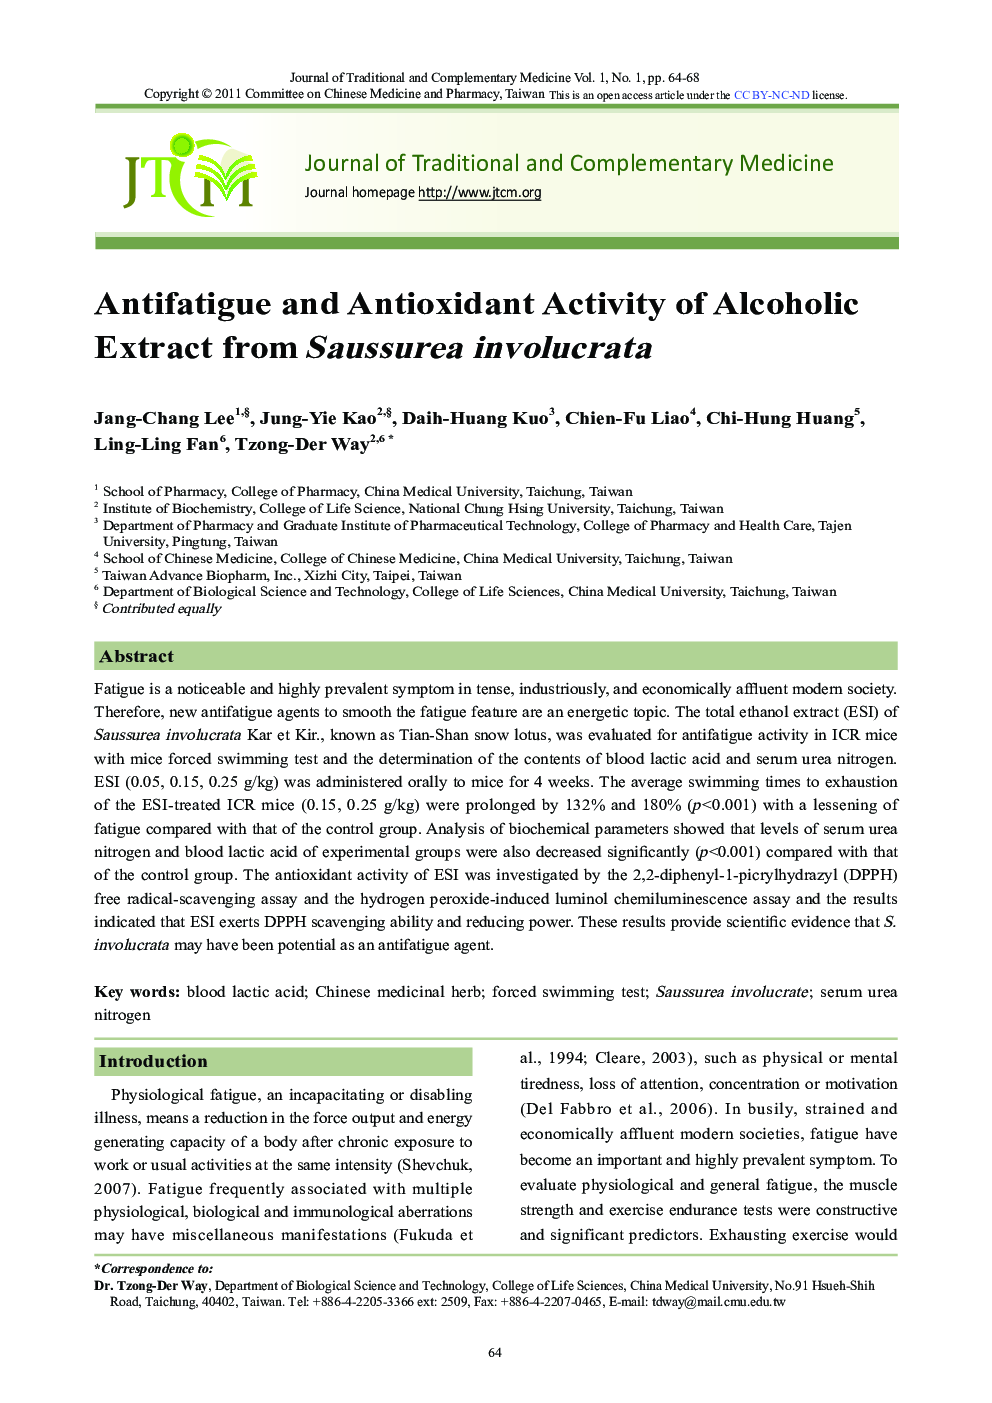 Antifatigue and Antioxidant Activity of Alcoholic Extract from Saussurea involucrata